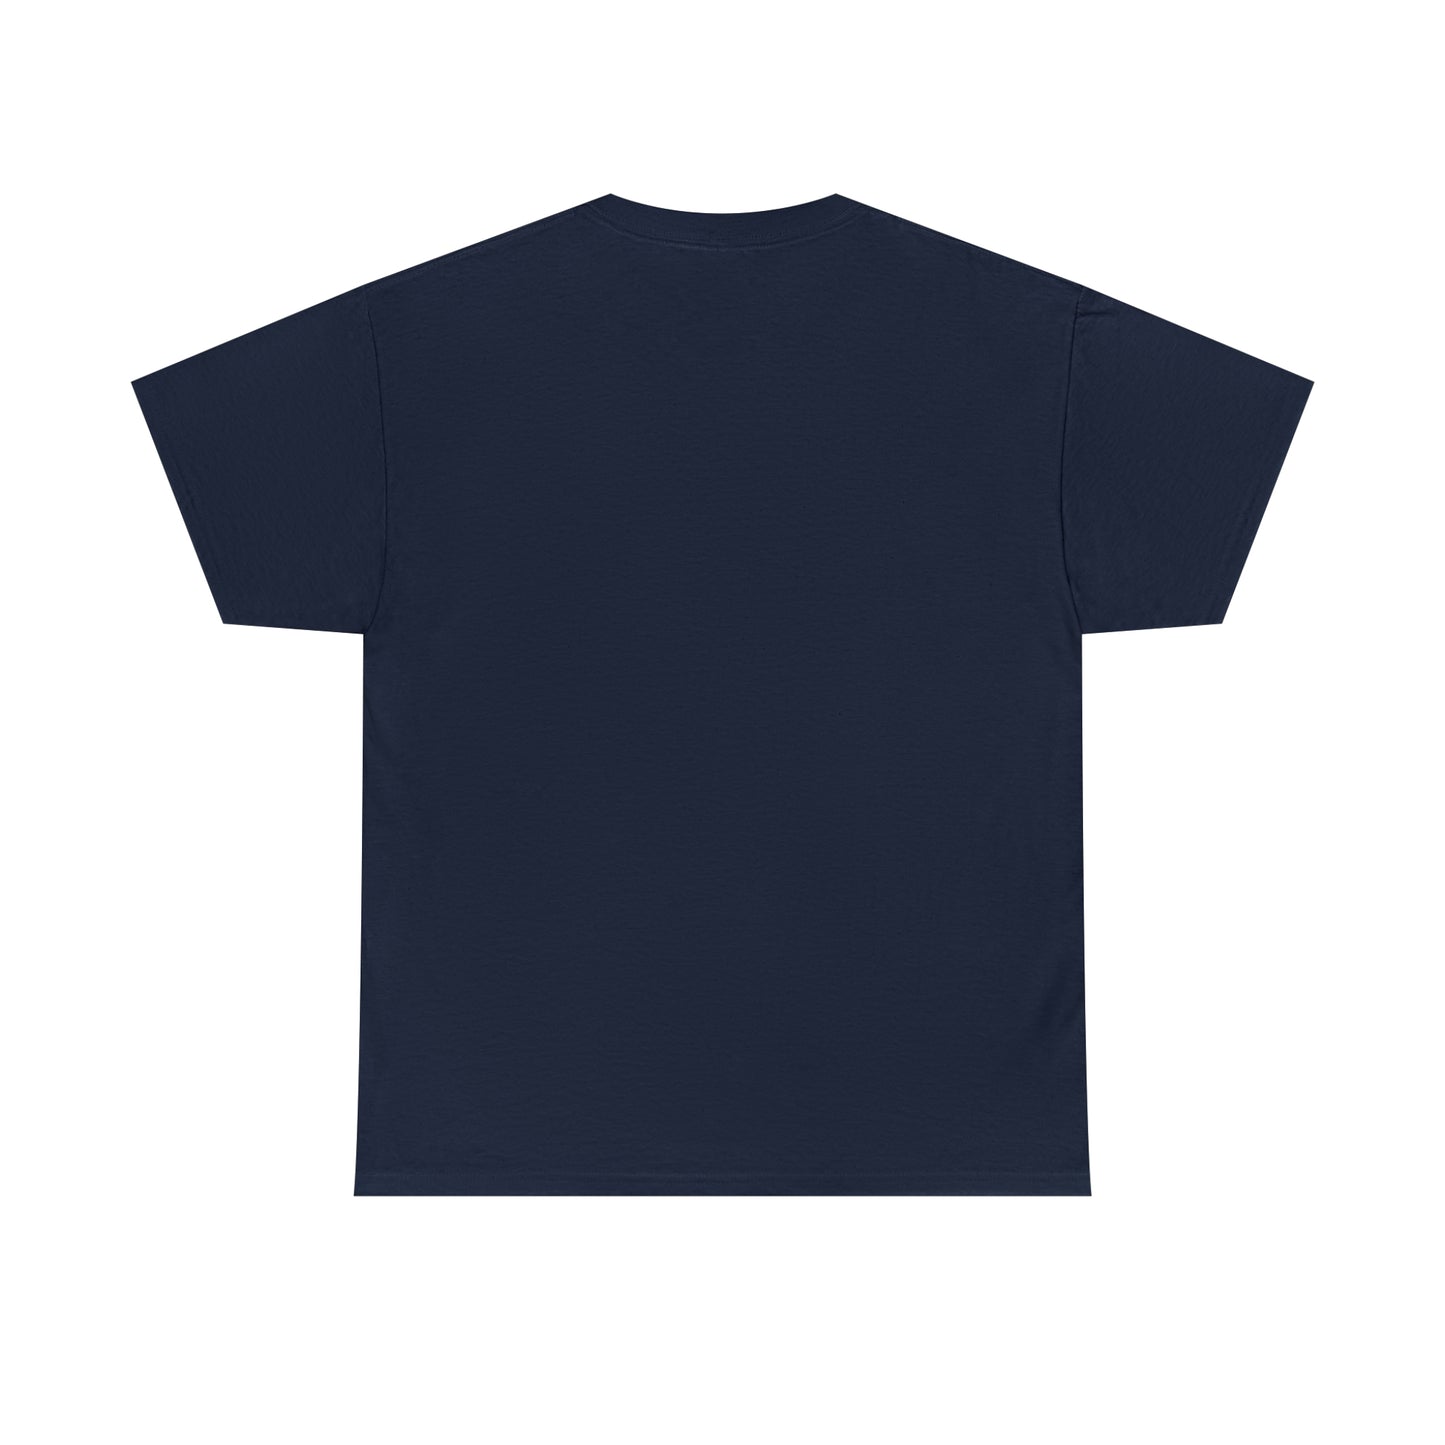 Nicaraguan Roots Design 5: Unisex T-Shirt